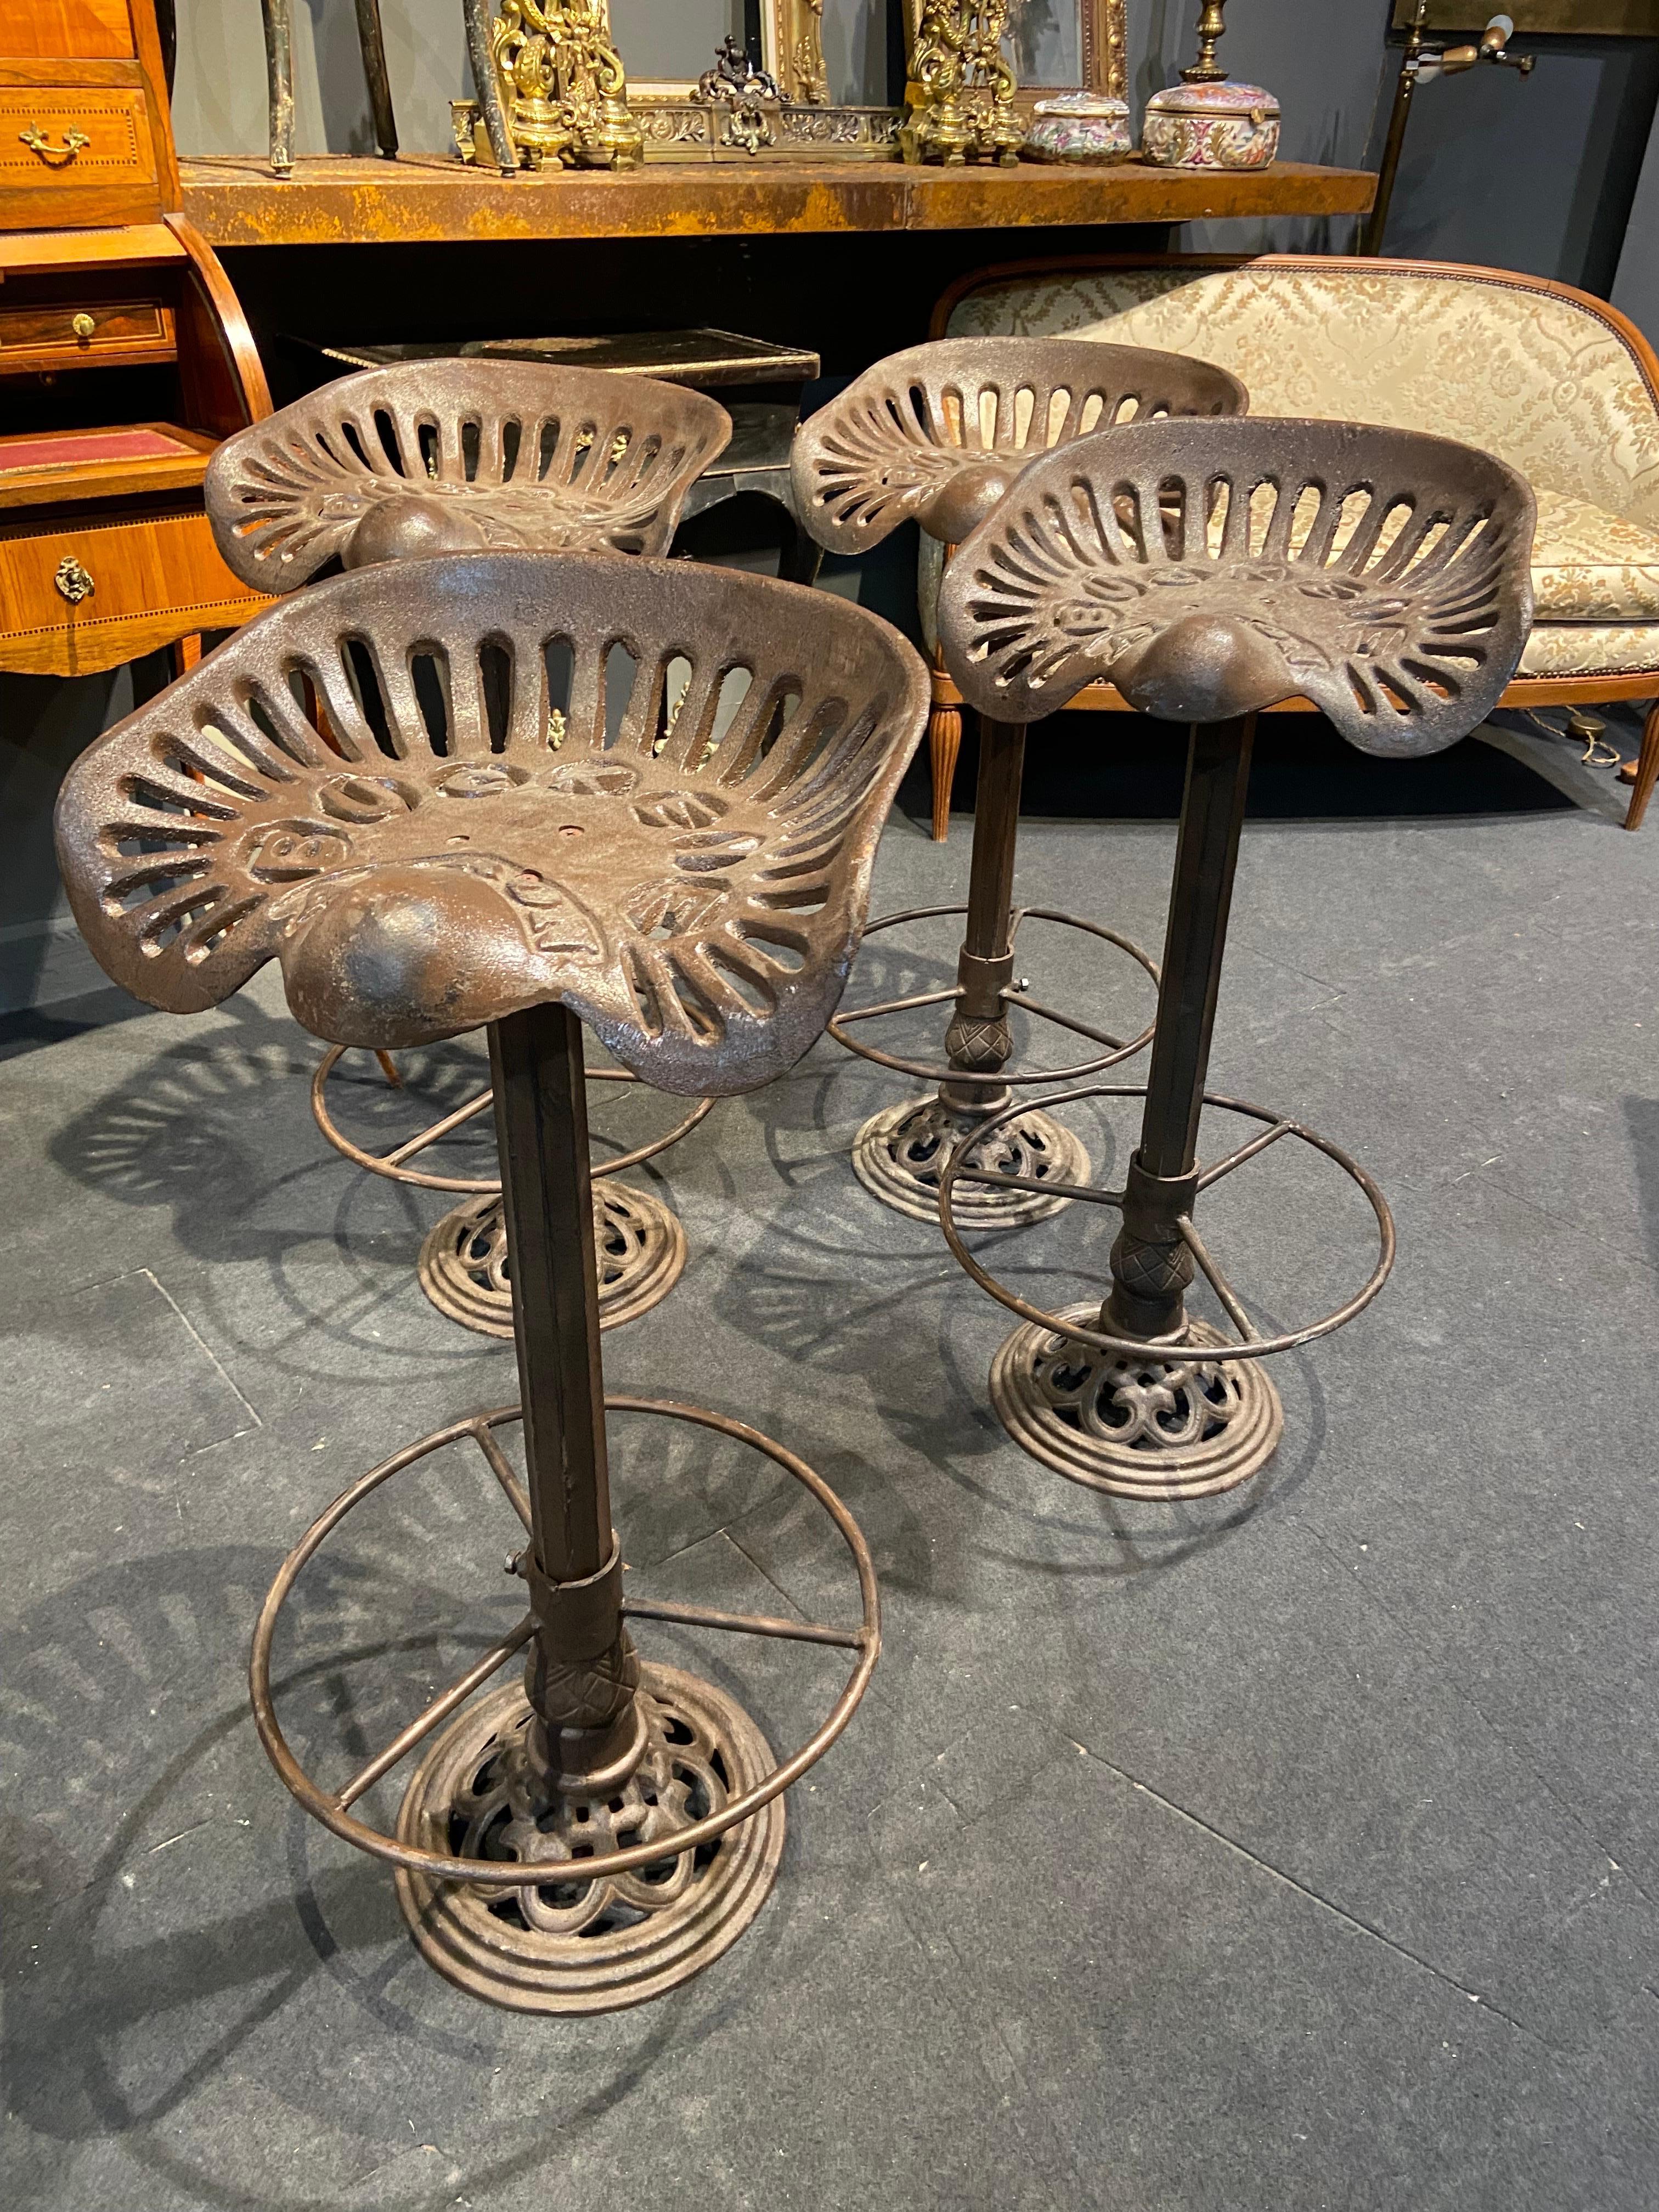 Four bar stools made of 